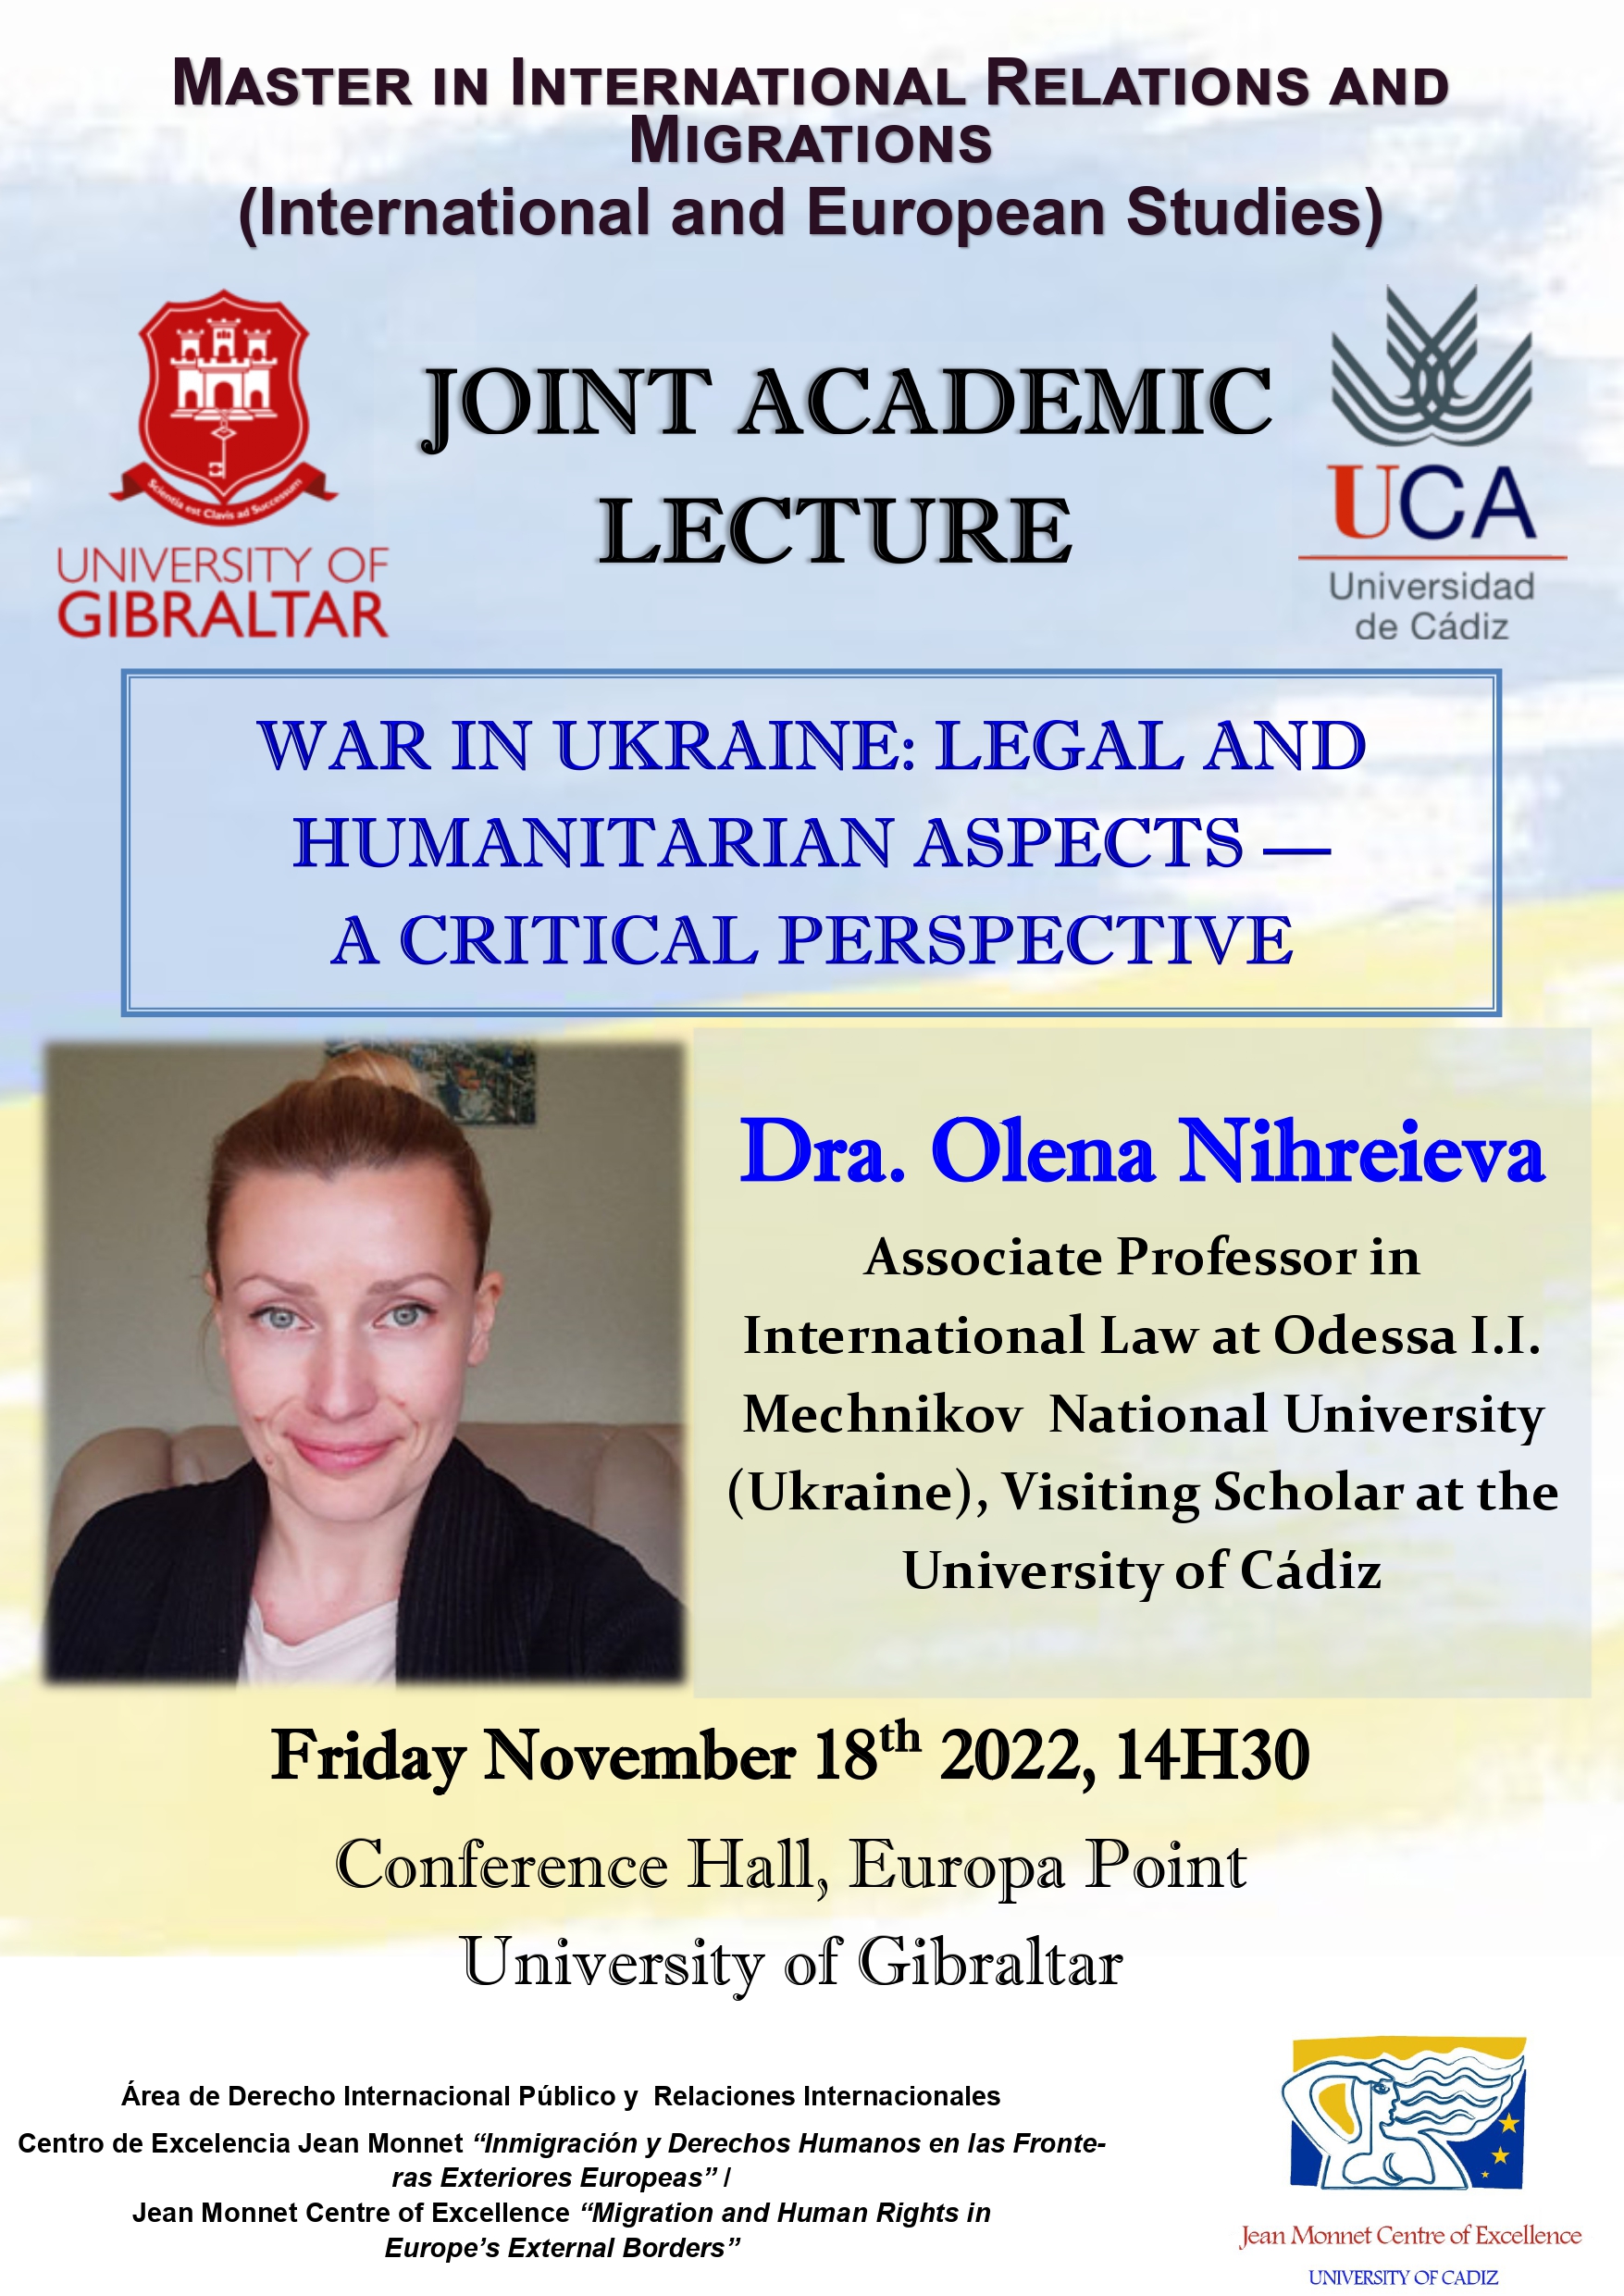 CONFERENCIA – War in Ukraine: Legal and Humanitarian Aspects – A Critical Perspective, Dra. Olena Nihreieva, Universidad de  Gibraltar, 18 noviembre 2022